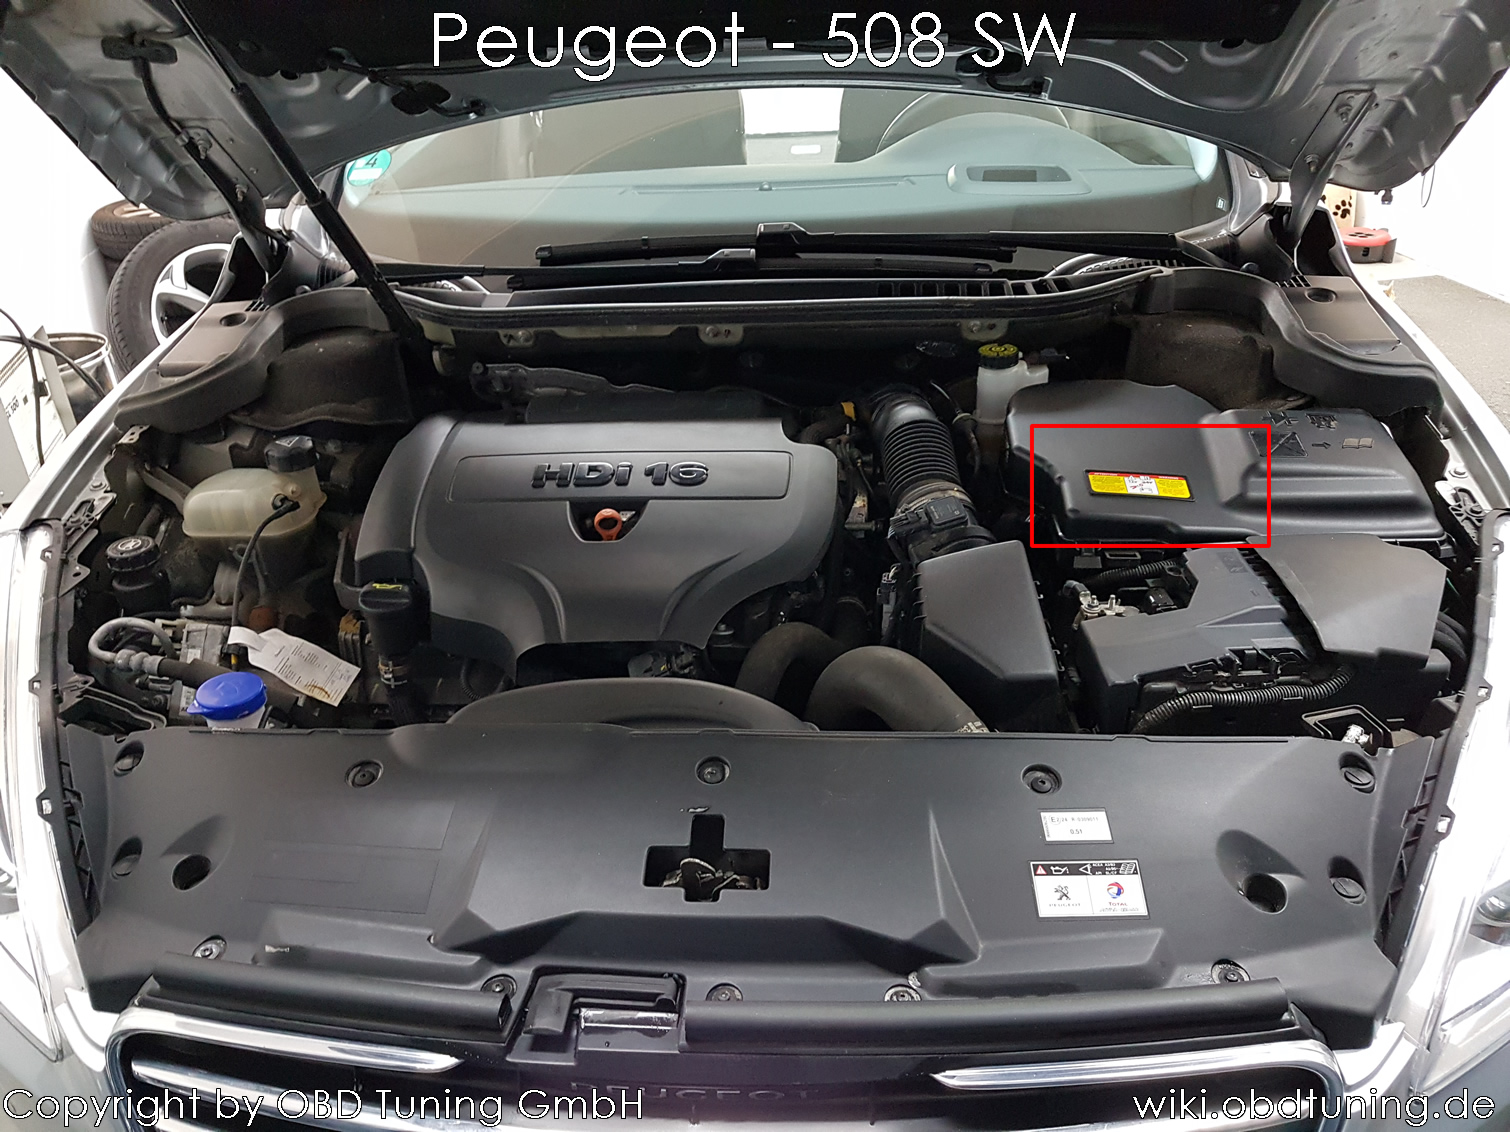 Peugeot 508 SW ECU.jpg